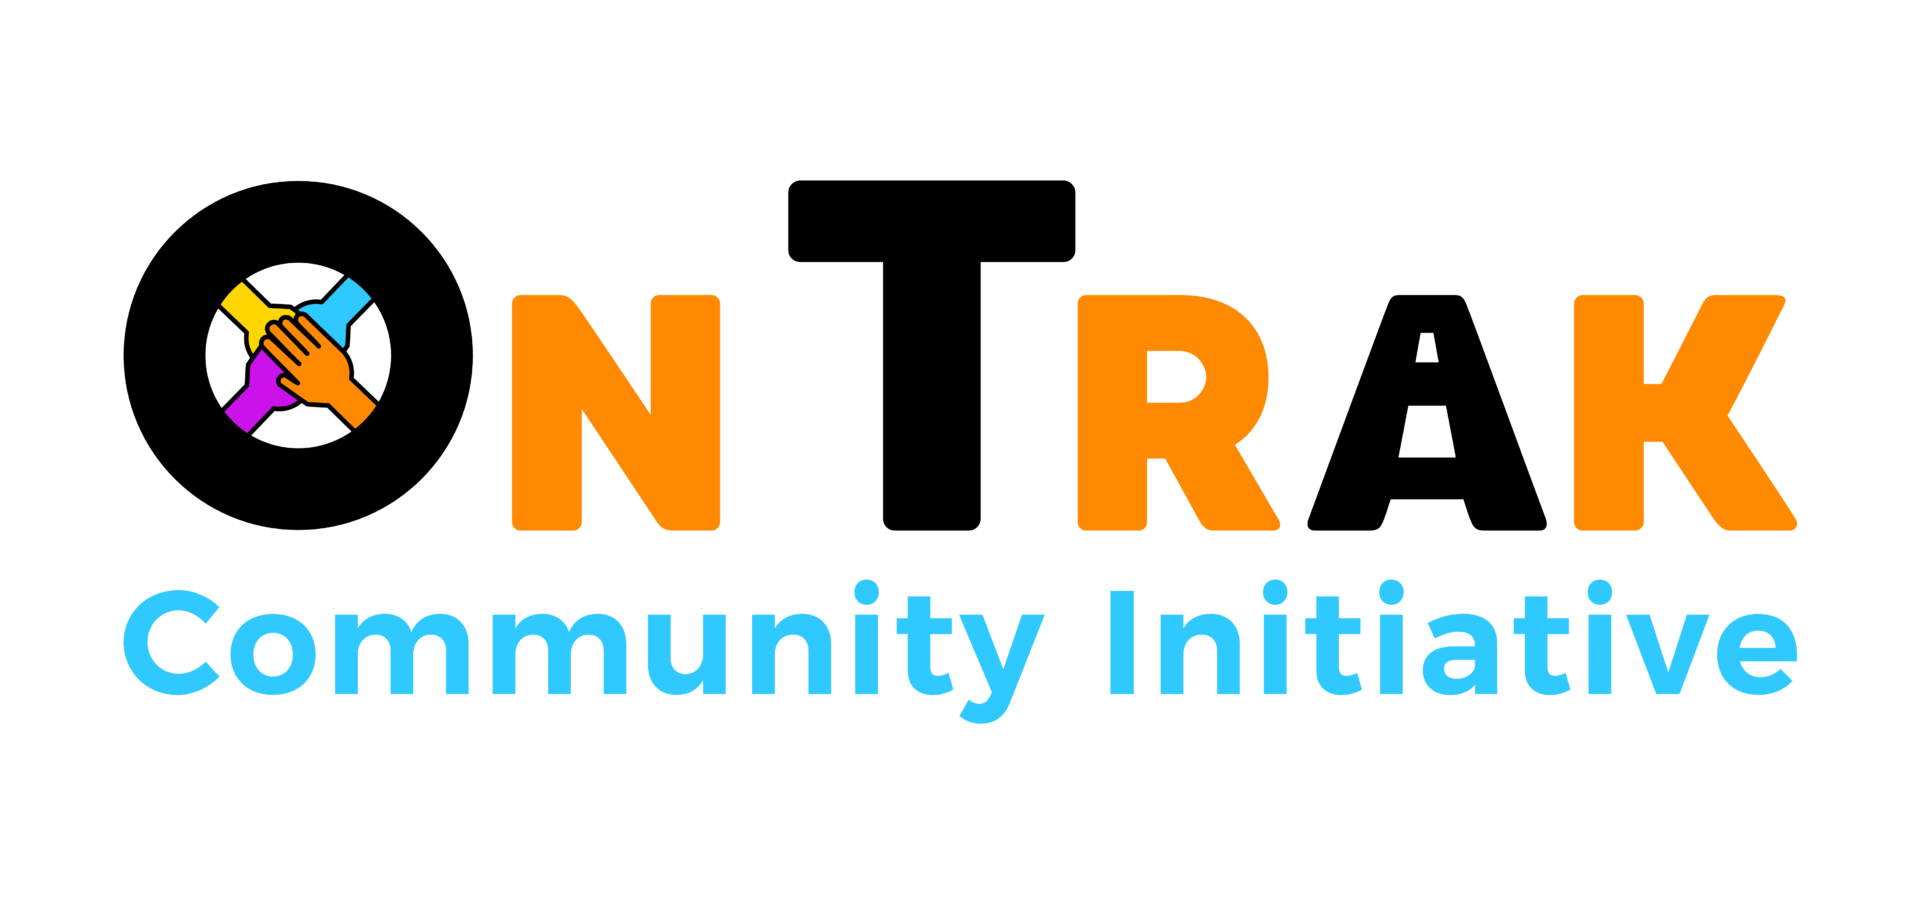 OnTrak Community Initiative